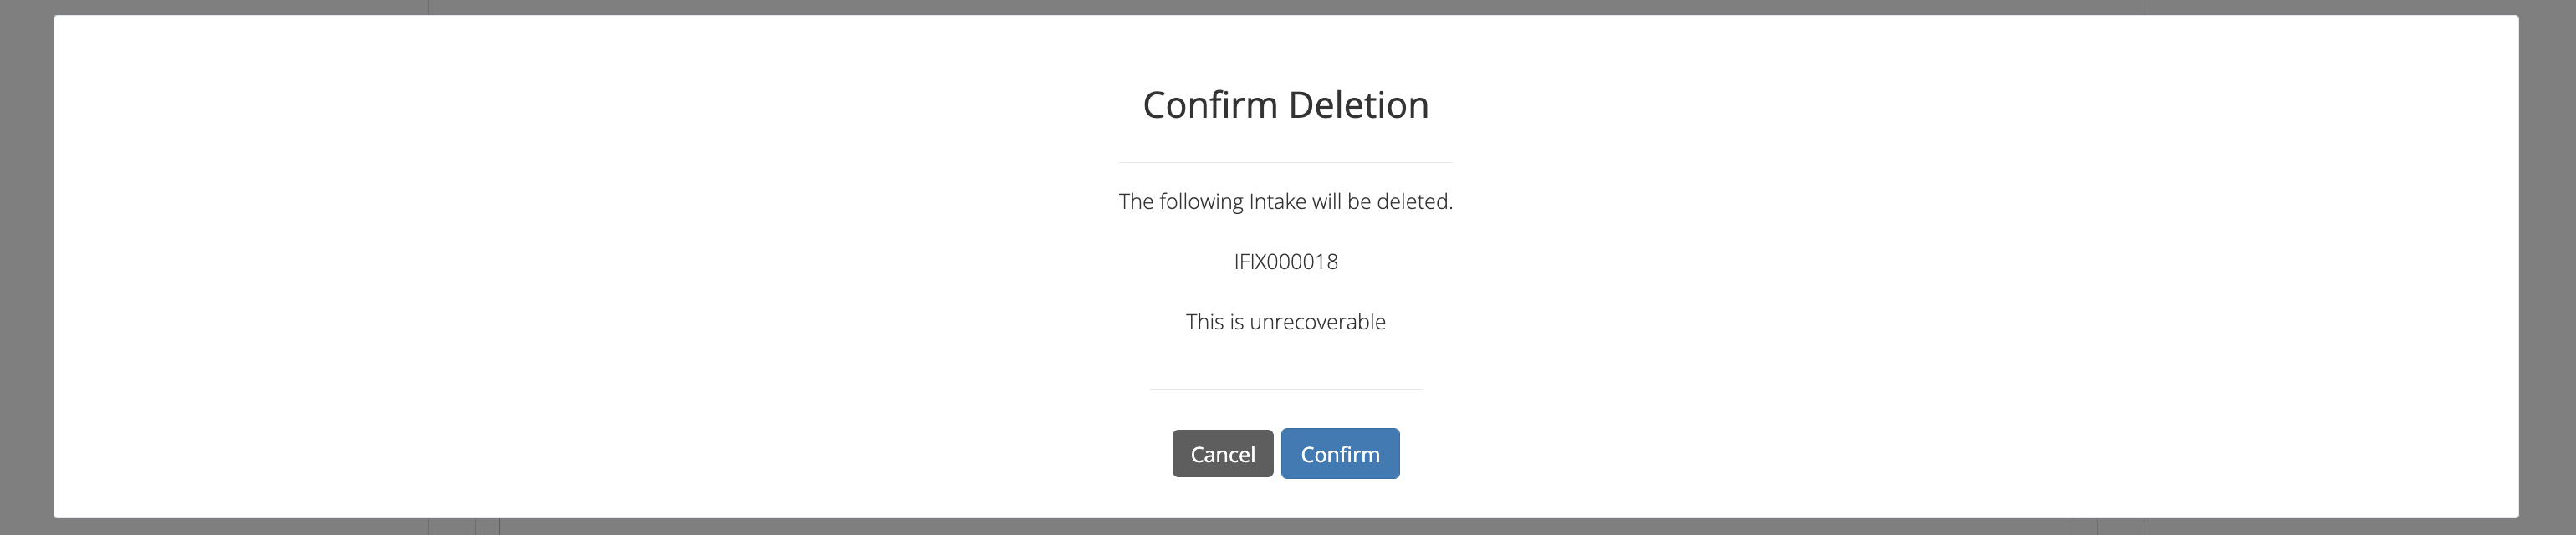 Client Intake Data Confirm Delete